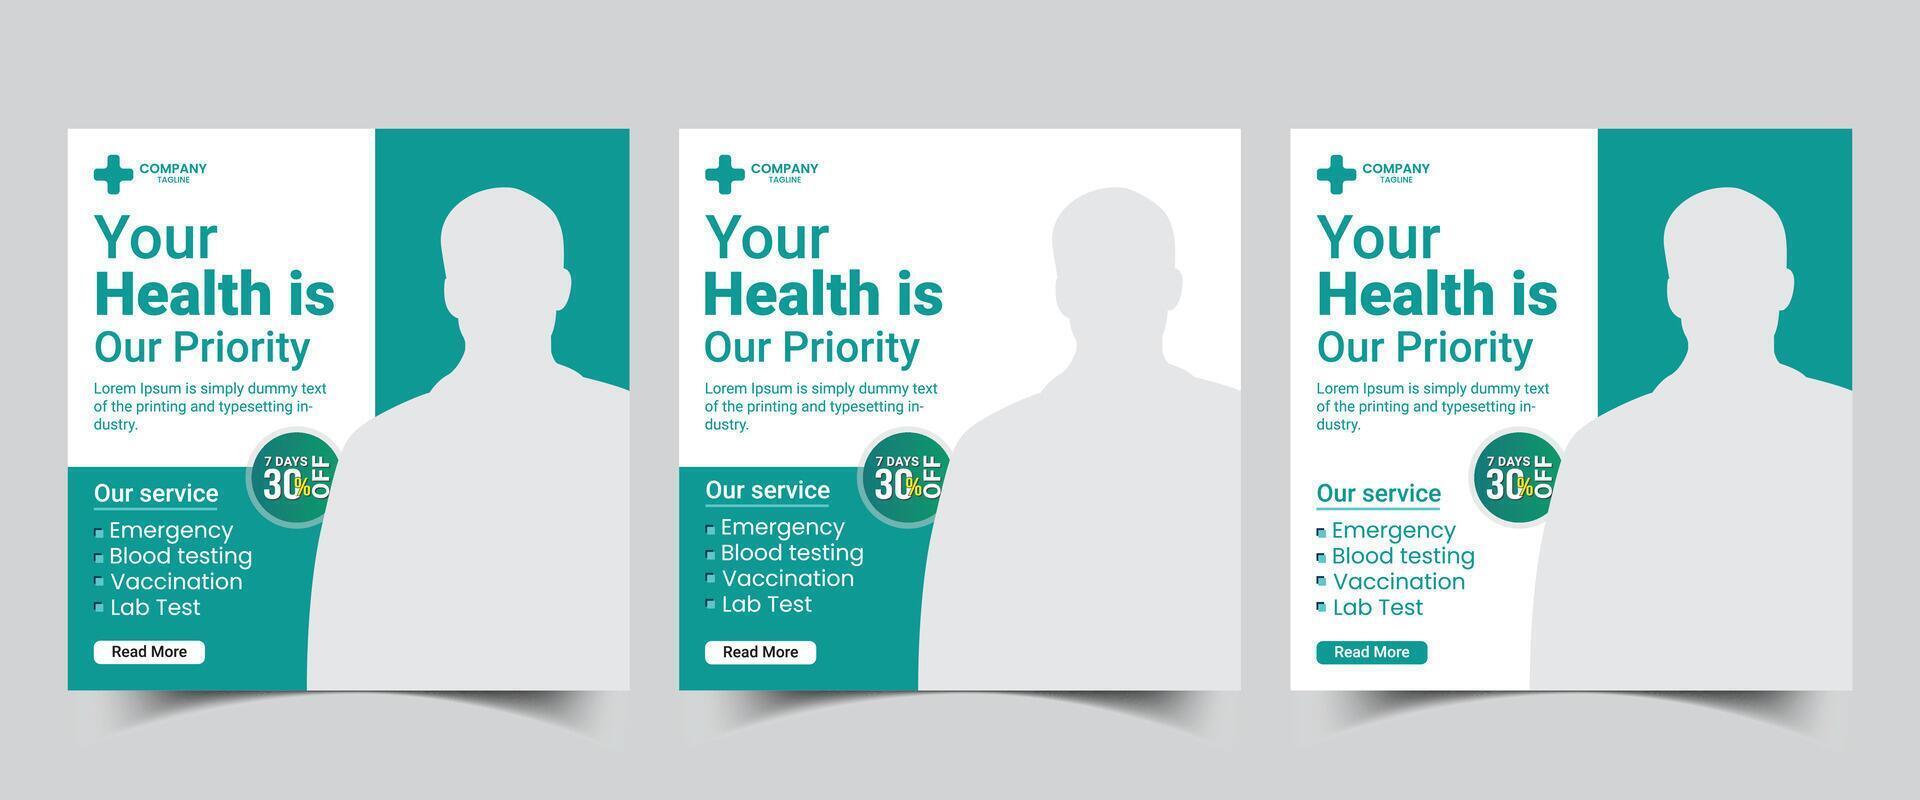 Medical social media post design for business promotion hospital banner template vector